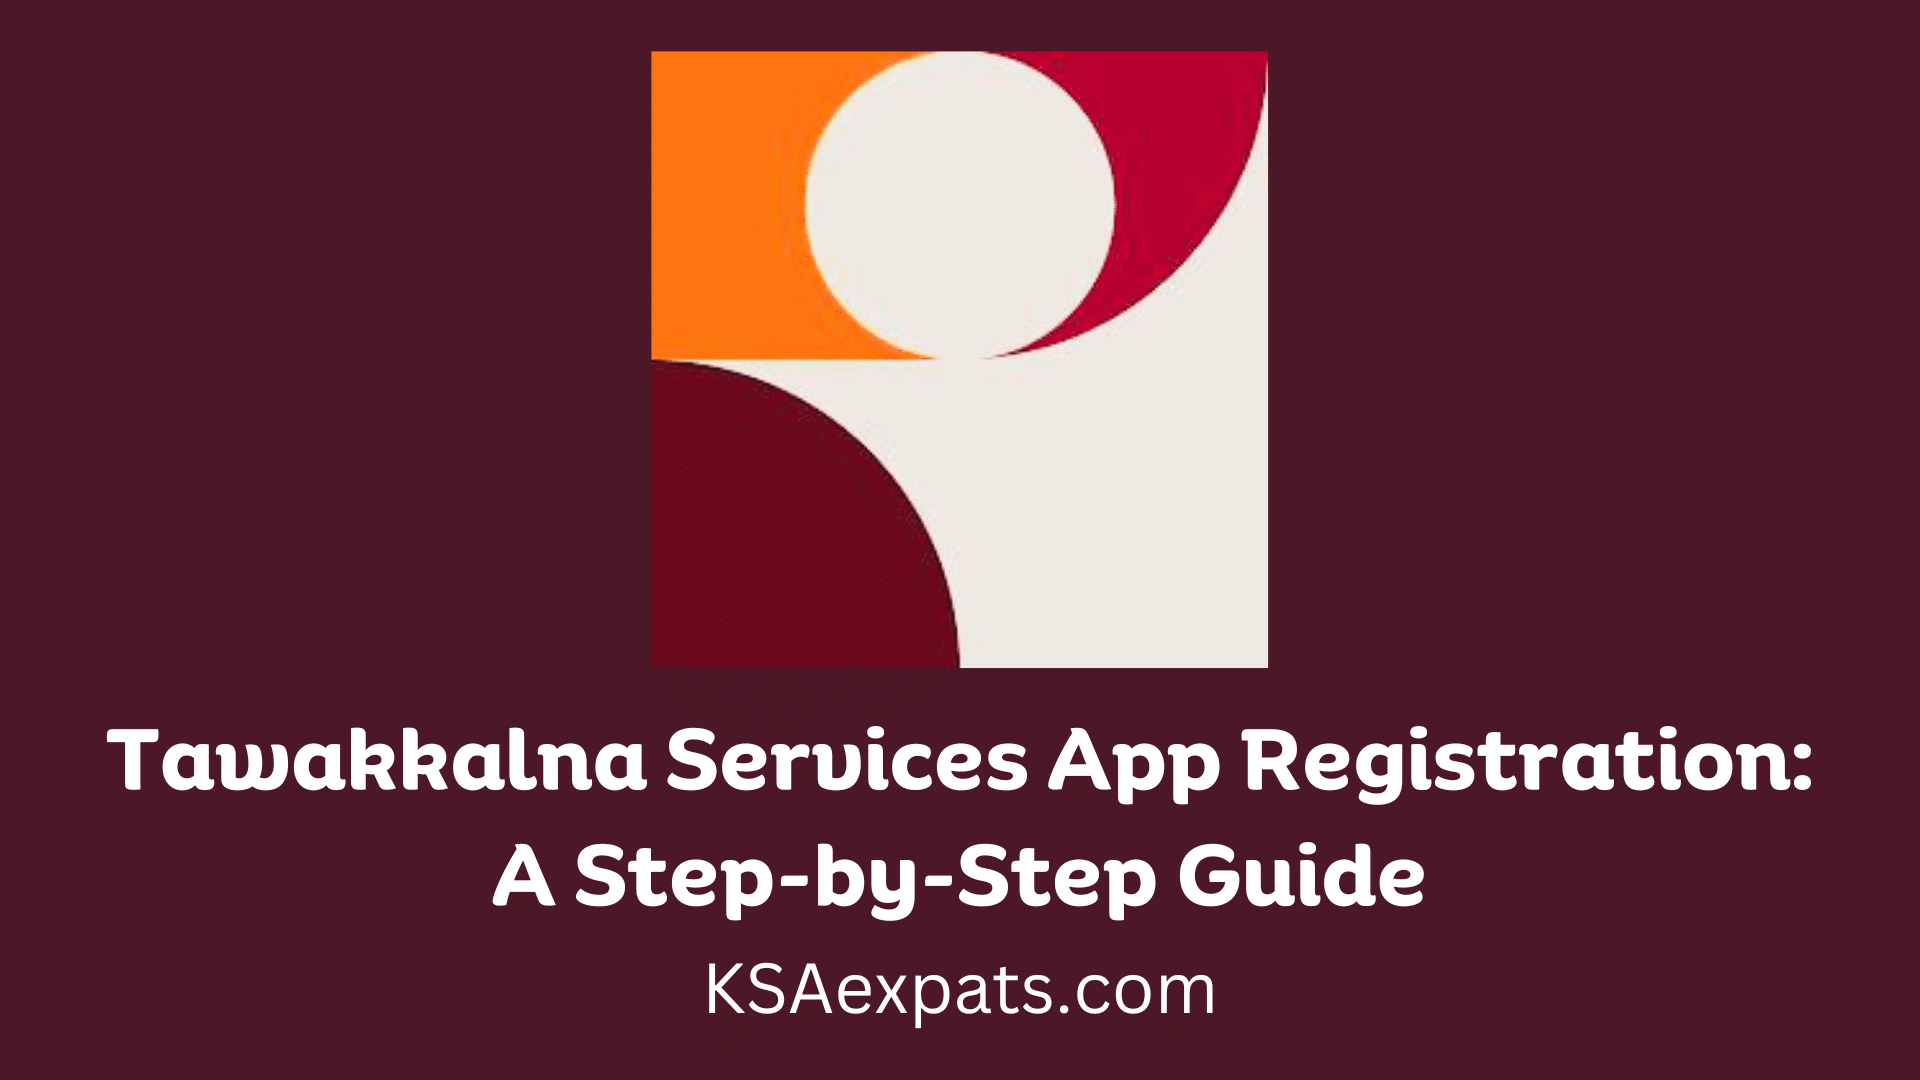 Tawakkalna Services App Registration: A Step-by-Step Guide